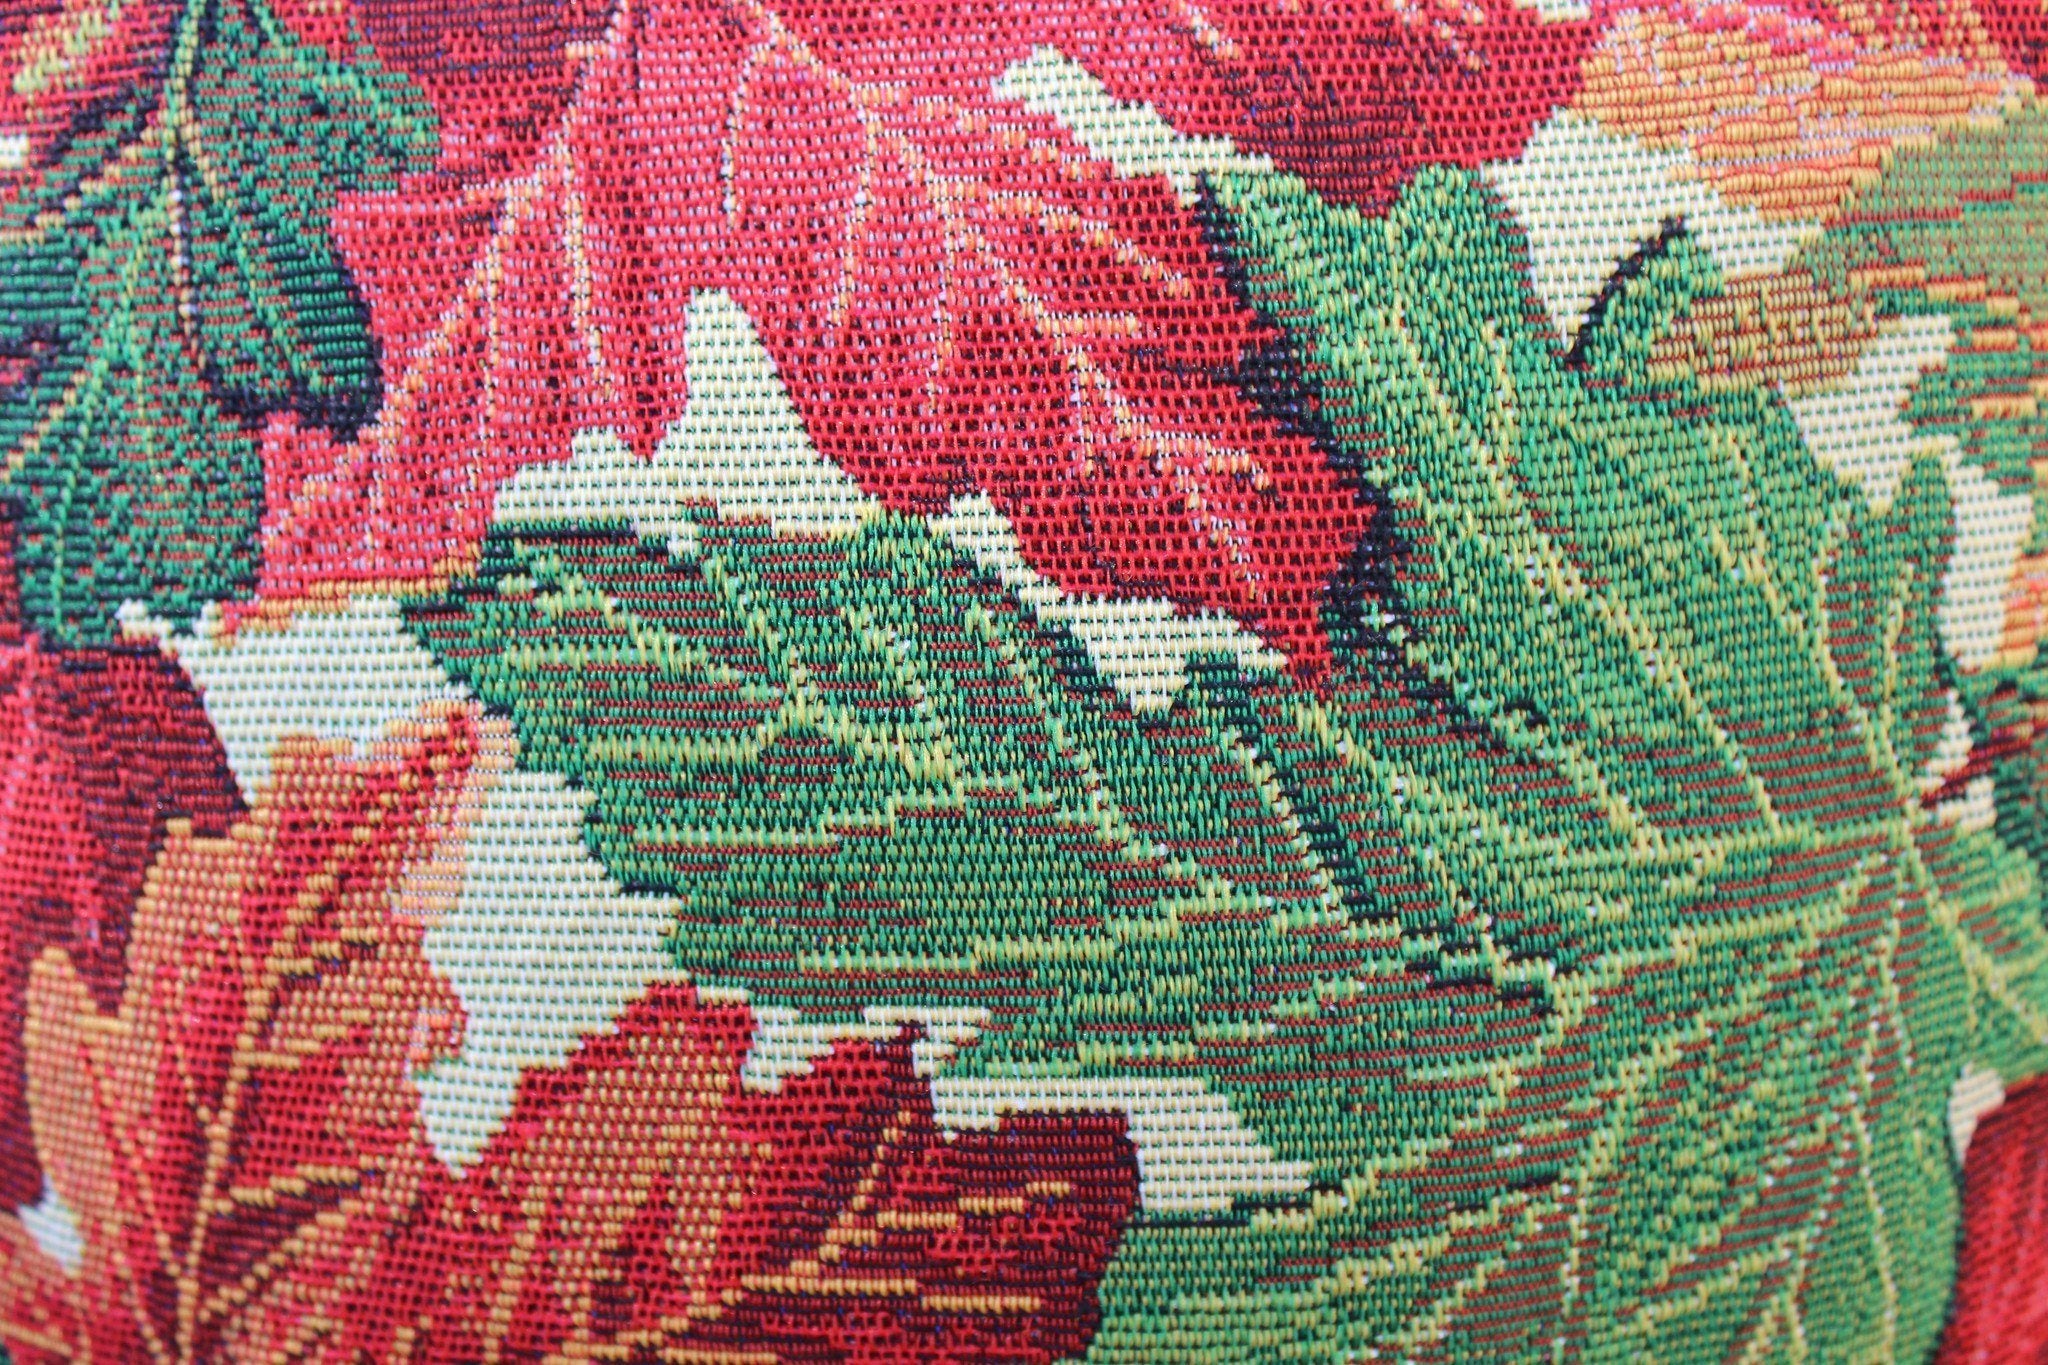 Tache Warm Colorful Thanksgiving Leaves Fall Foliage Throw Pillow Cover (FF11516CC) - Tache Home Fashion